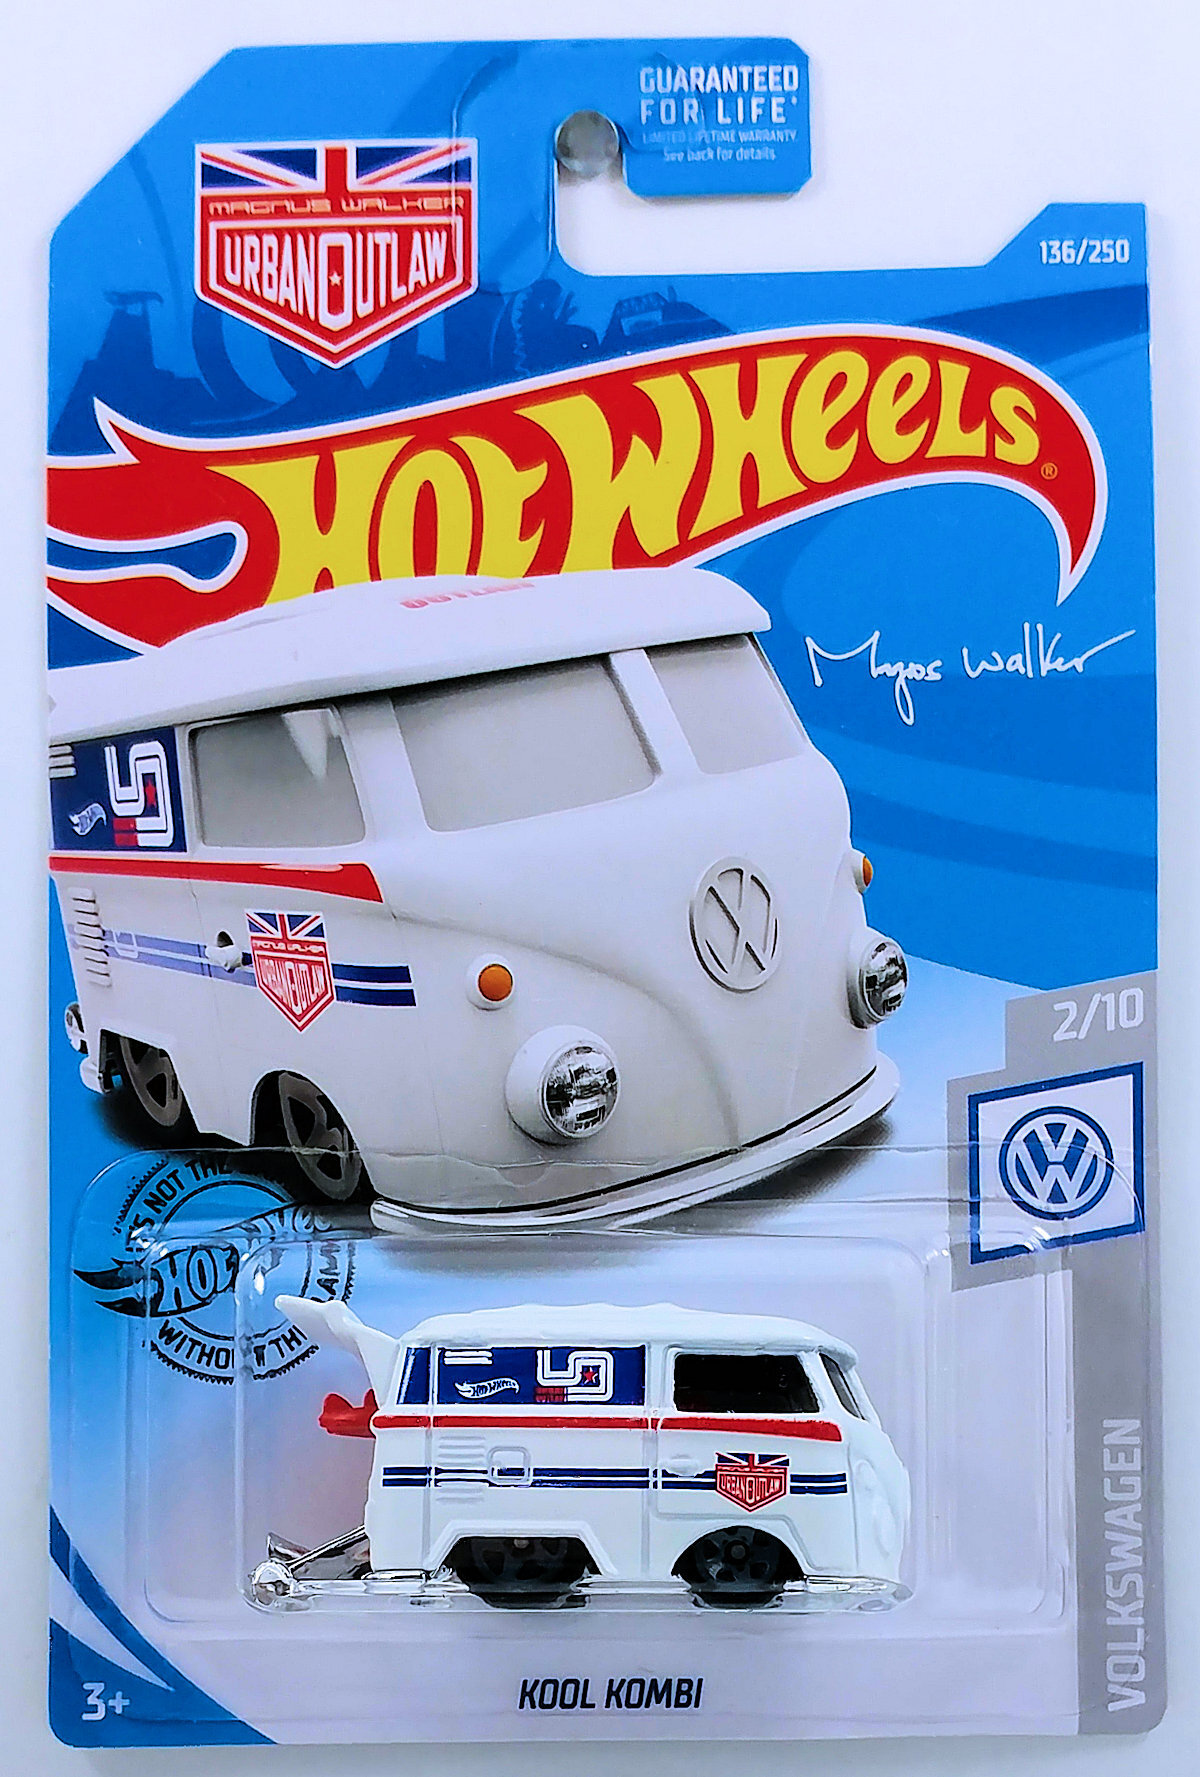 2019 Hot Wheels Volkswagen 2/10 Kool Kombi 136/250 White Urban-Outlaw 